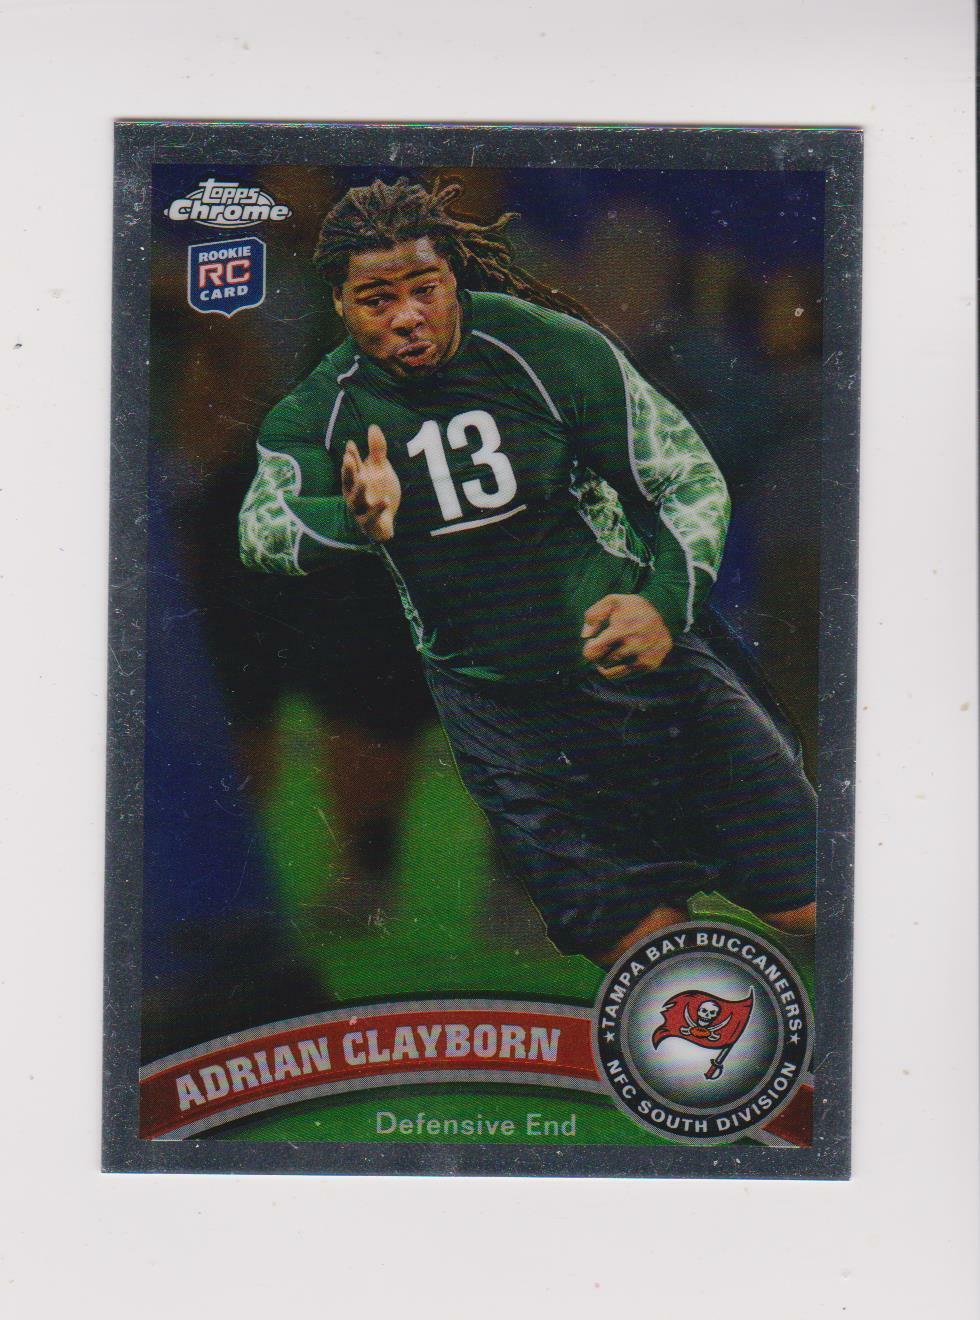 2011 Topps Chrome #14 Adrian Clayborn rookie card, Iowa Hawkeyes. rookie card picture